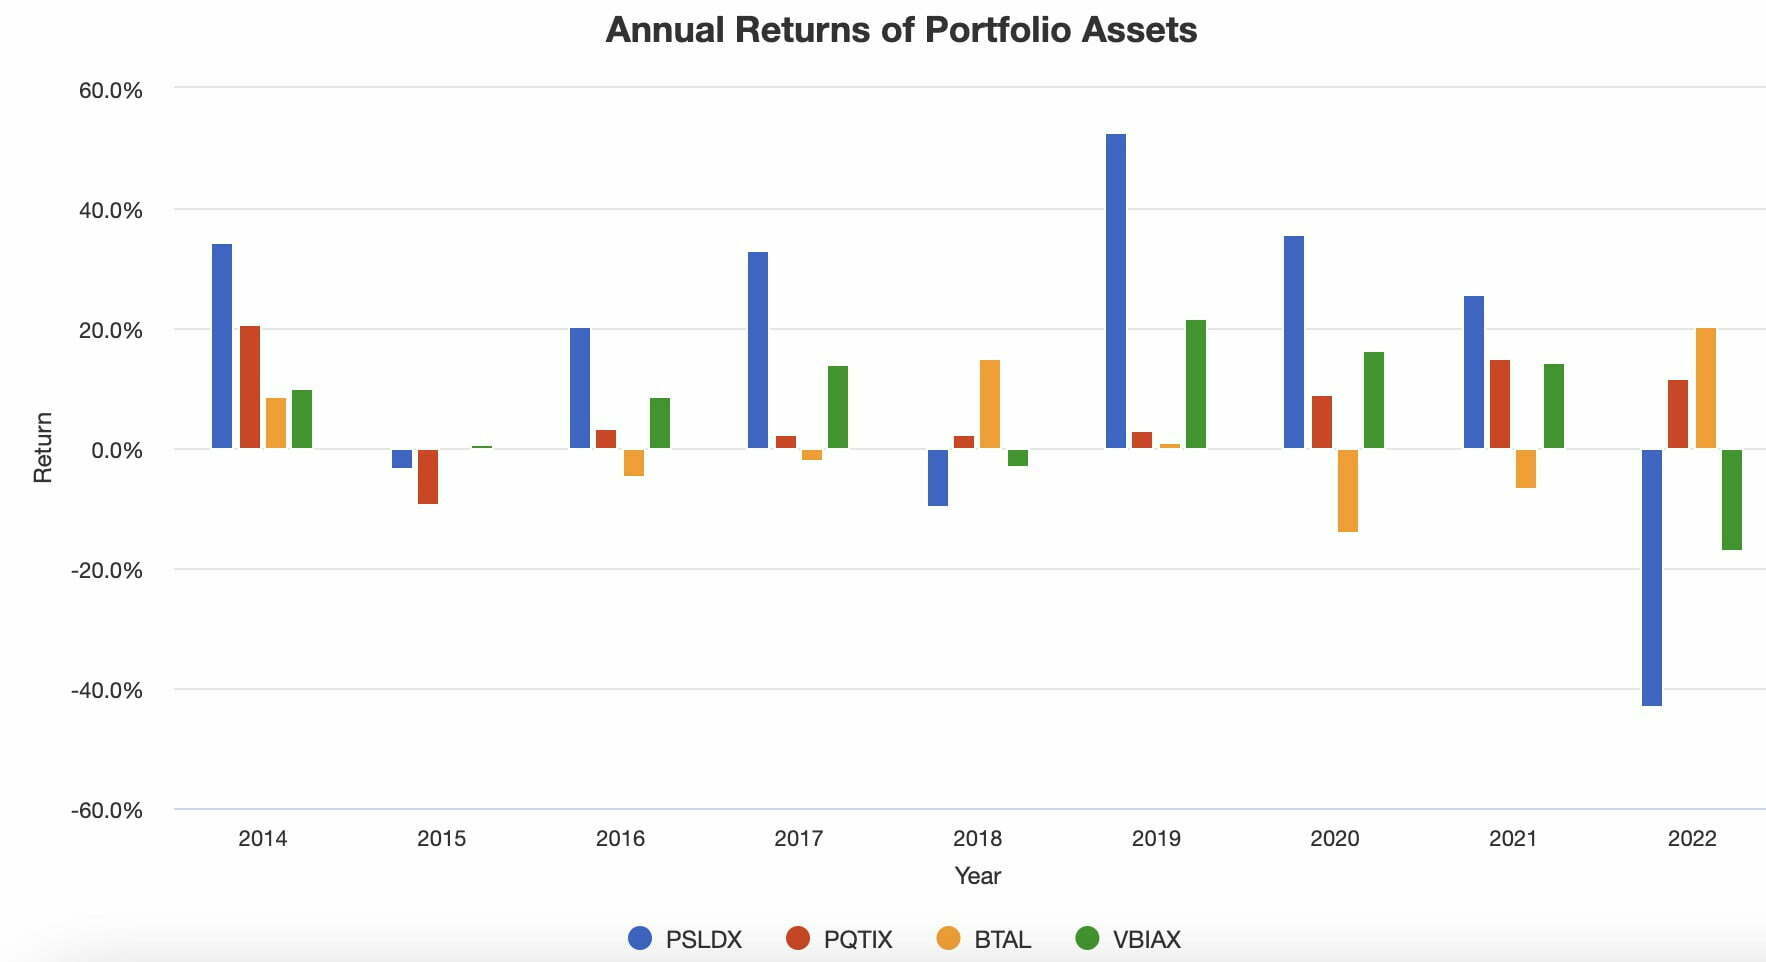 Annual Returns of Portfolio Assets PSLDX + PQTIX + BTAL + VBIAX